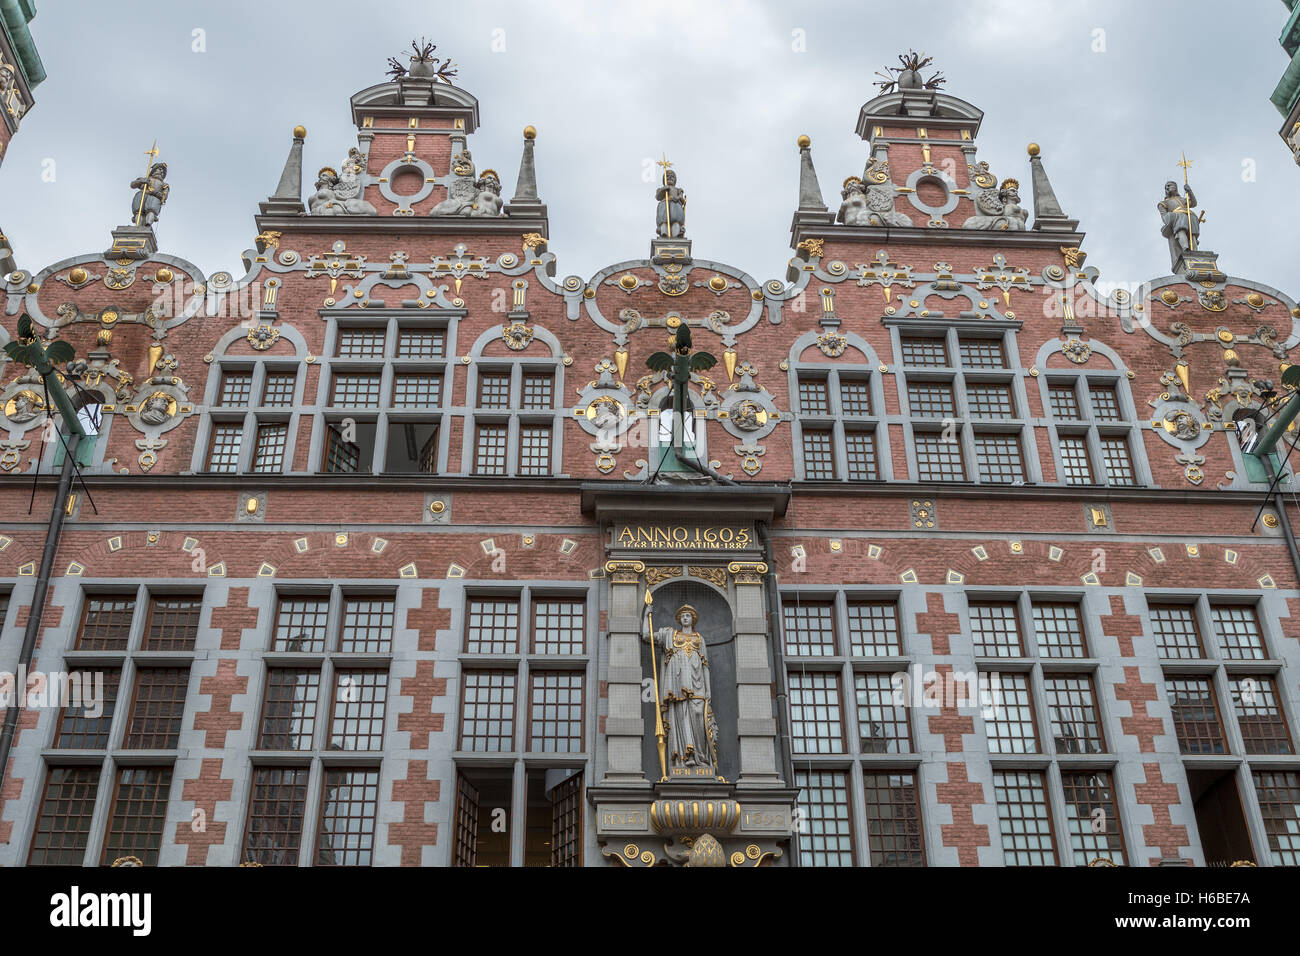 The Great Armoury, Gdansk, Poland. Dutch Renaissance architecture Stock Photo